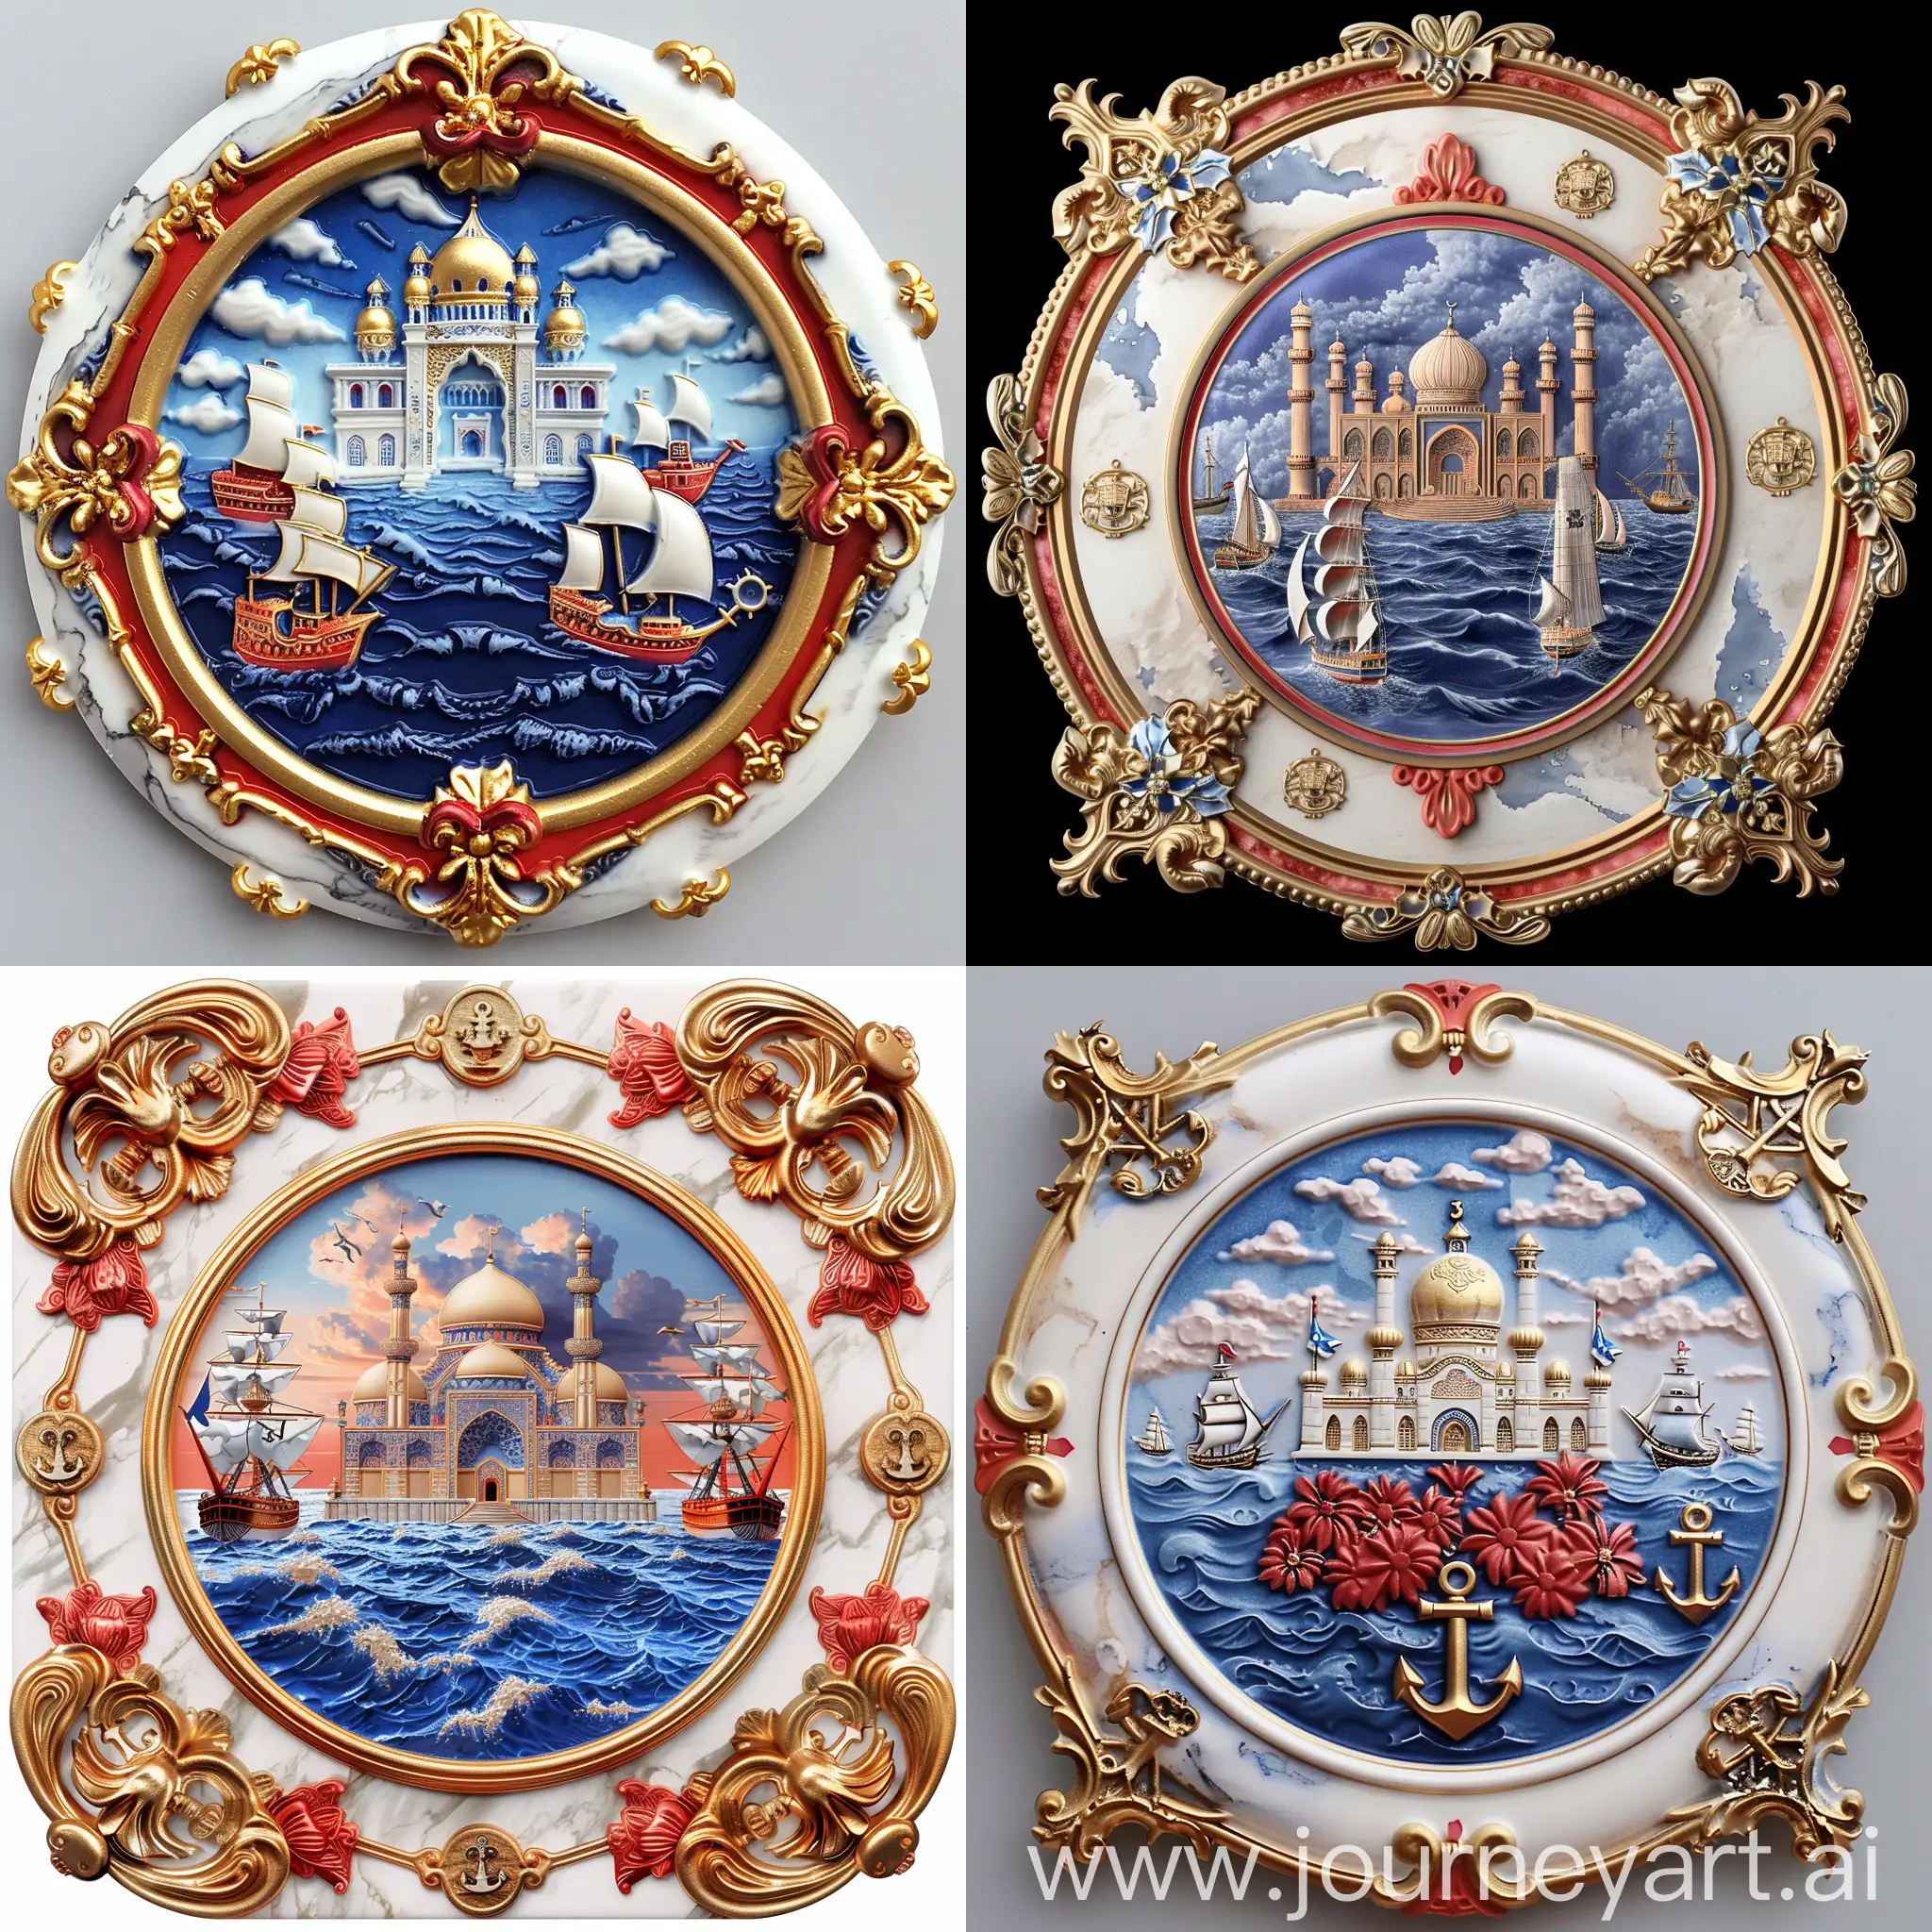 Pirates-Persian-Mosque-Porcelain-Medal-with-Naval-Symbols-and-Iznik-Decorations